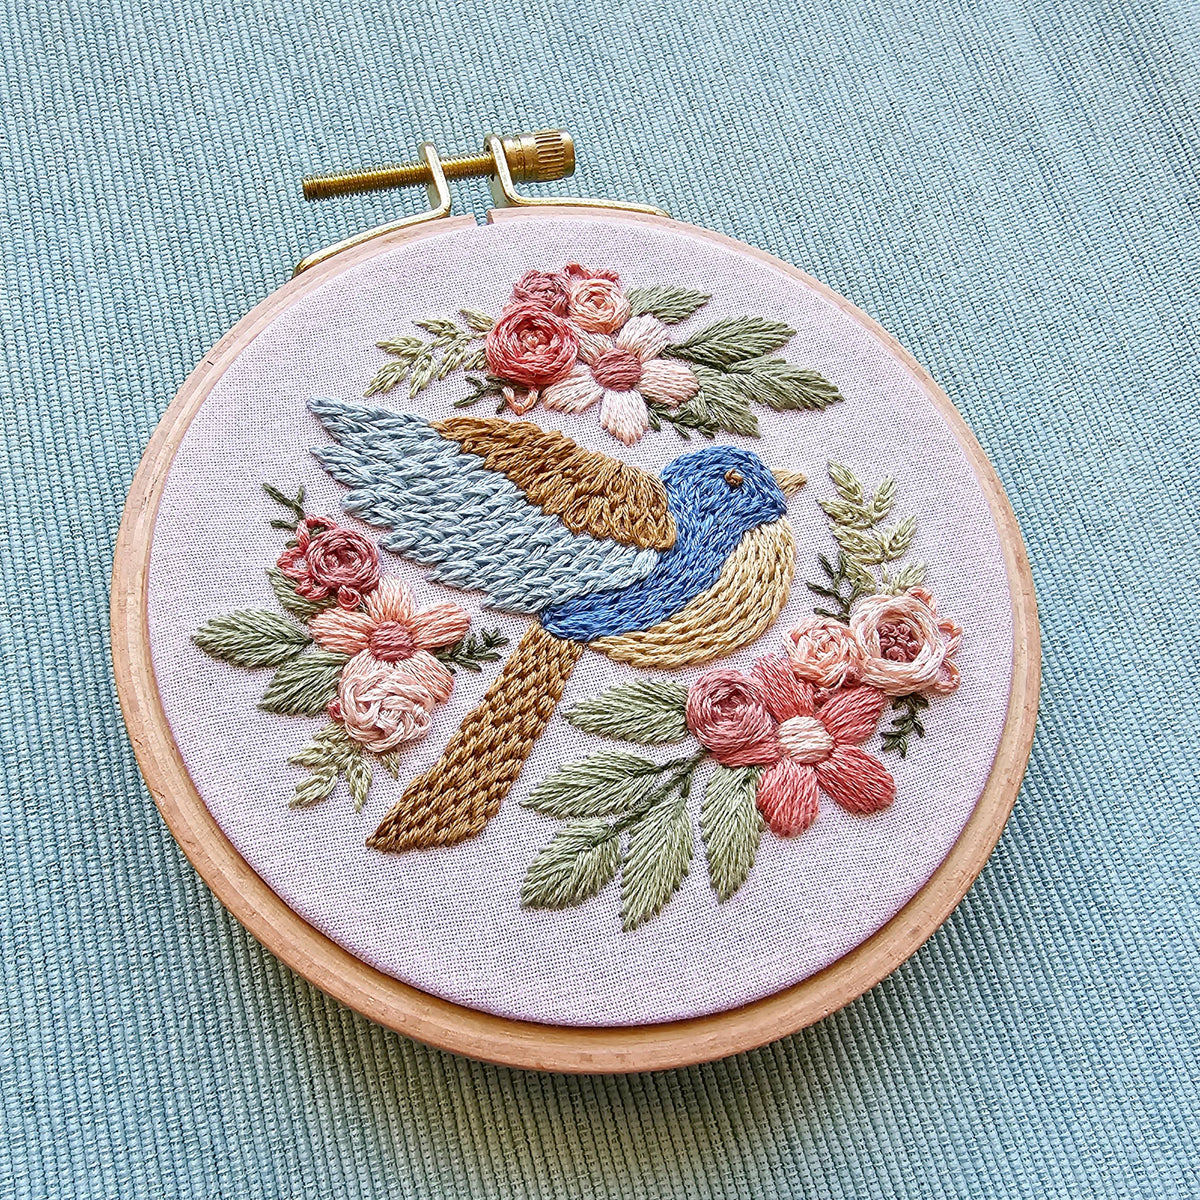 Jessica Long Embroidery Bluebird Sampler beginner hand embroidery kit